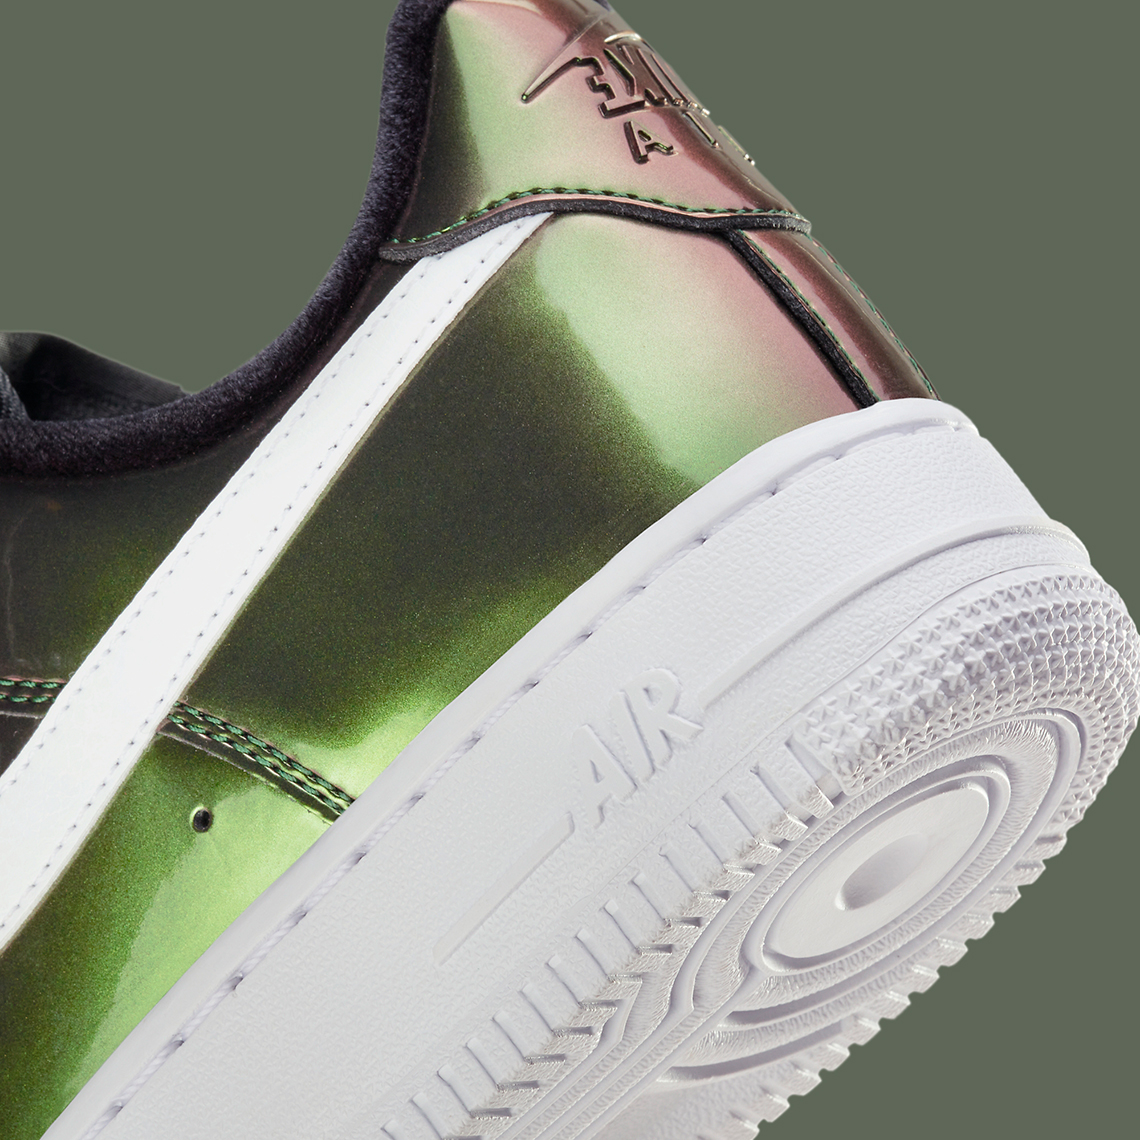 Nike Air Force 1 High LV8 Iridescent - Sneaker Bar Detroit